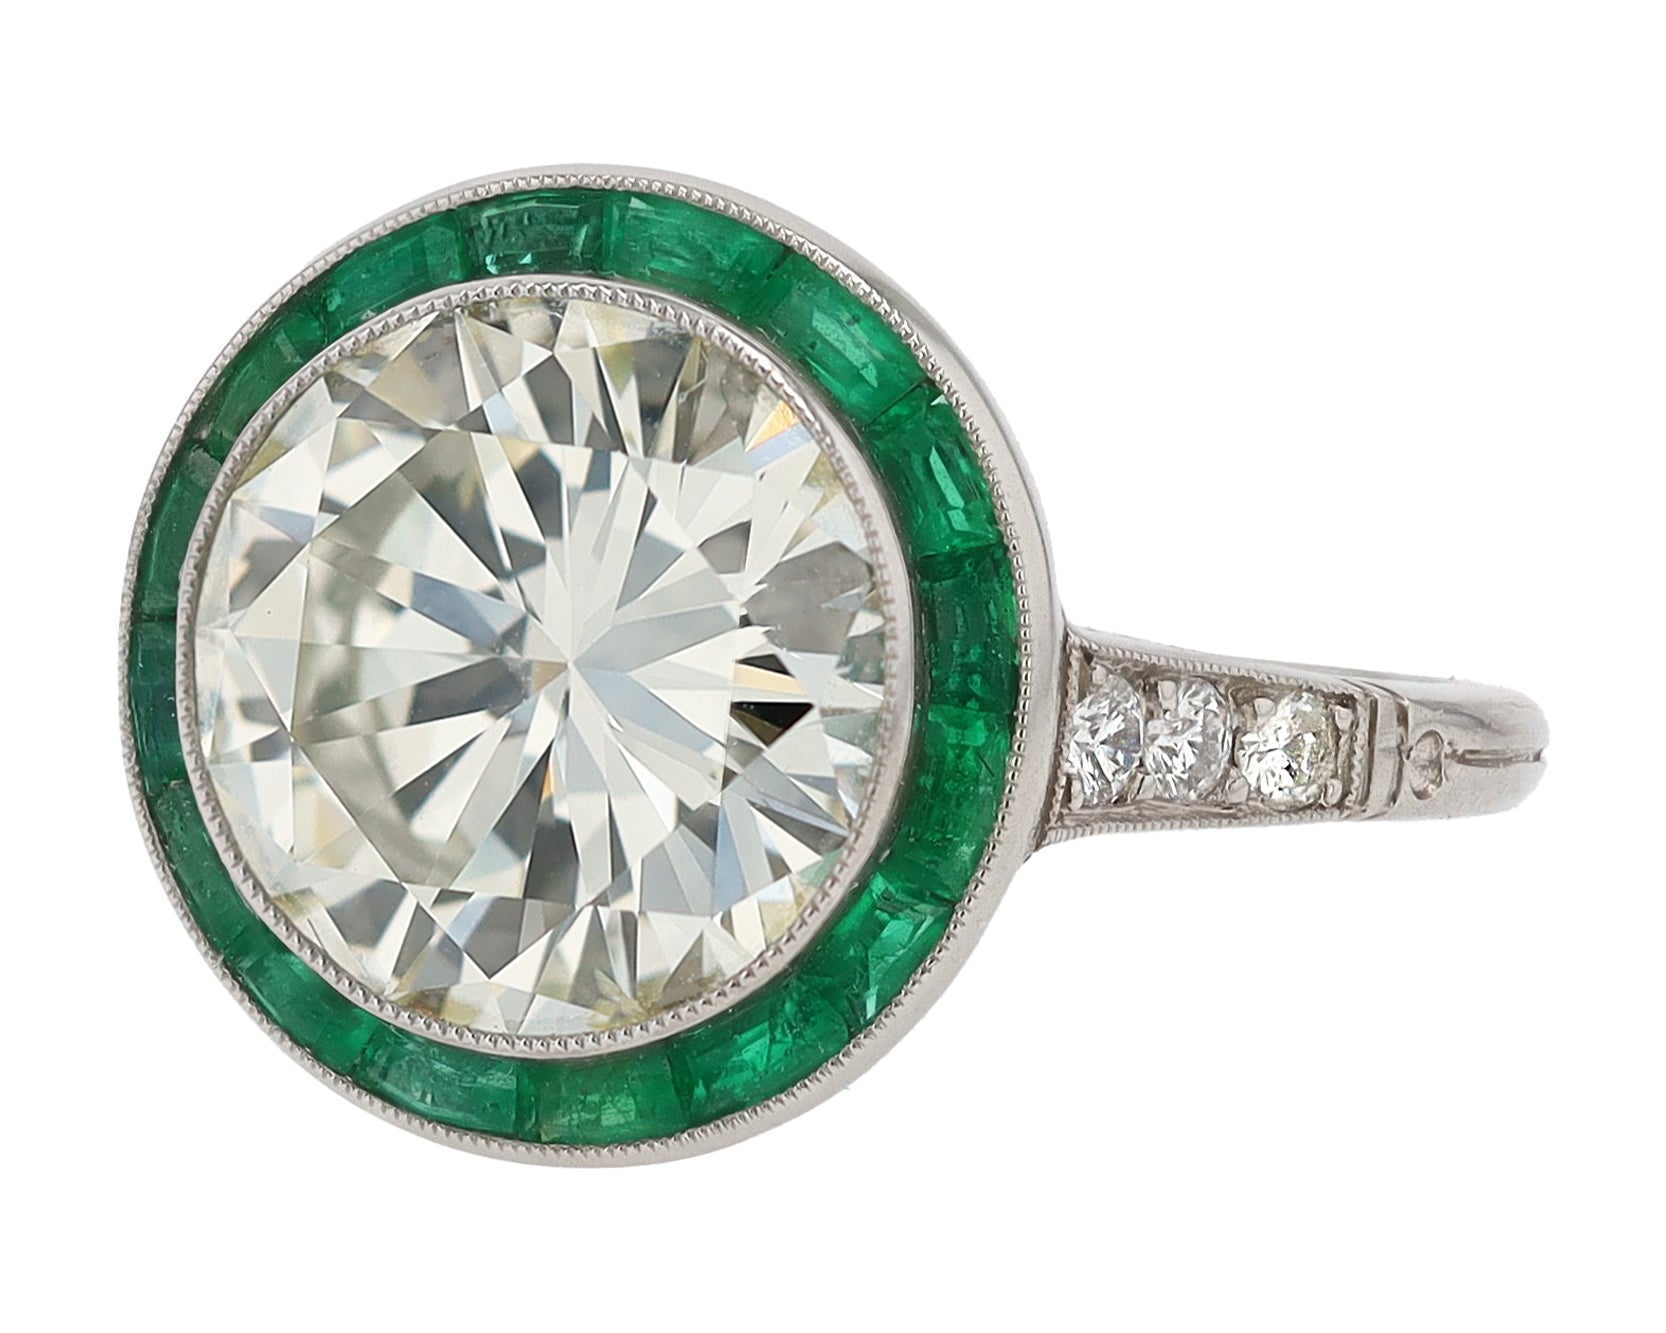 Bespoke Art Deco Revival 4.10 Carat Diamond & Emerald Platinum Engagement Ring